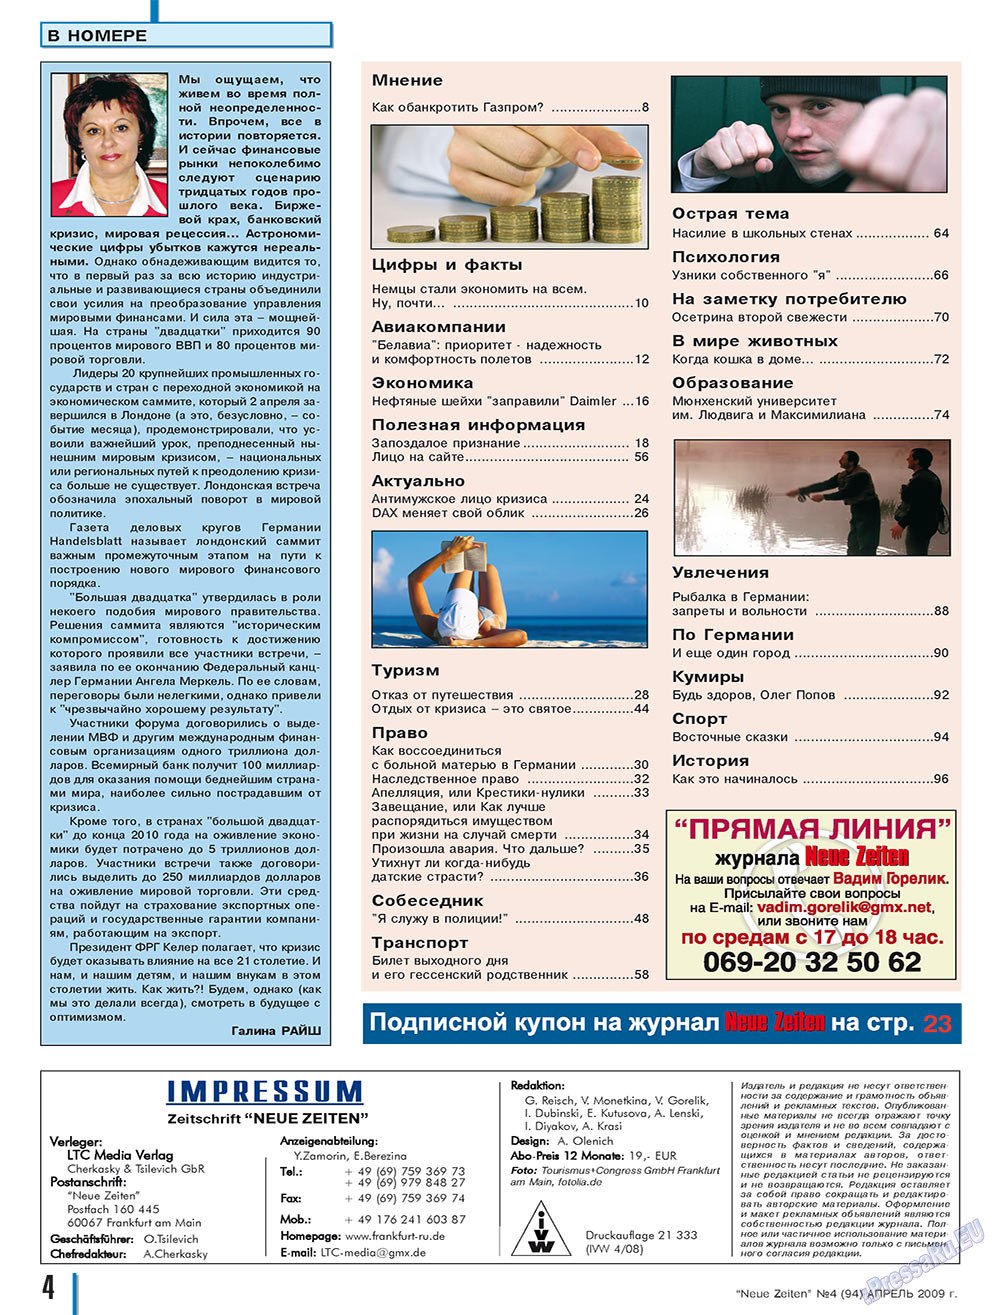 Neue Zeiten (журнал). 2009 год, номер 4, стр. 4